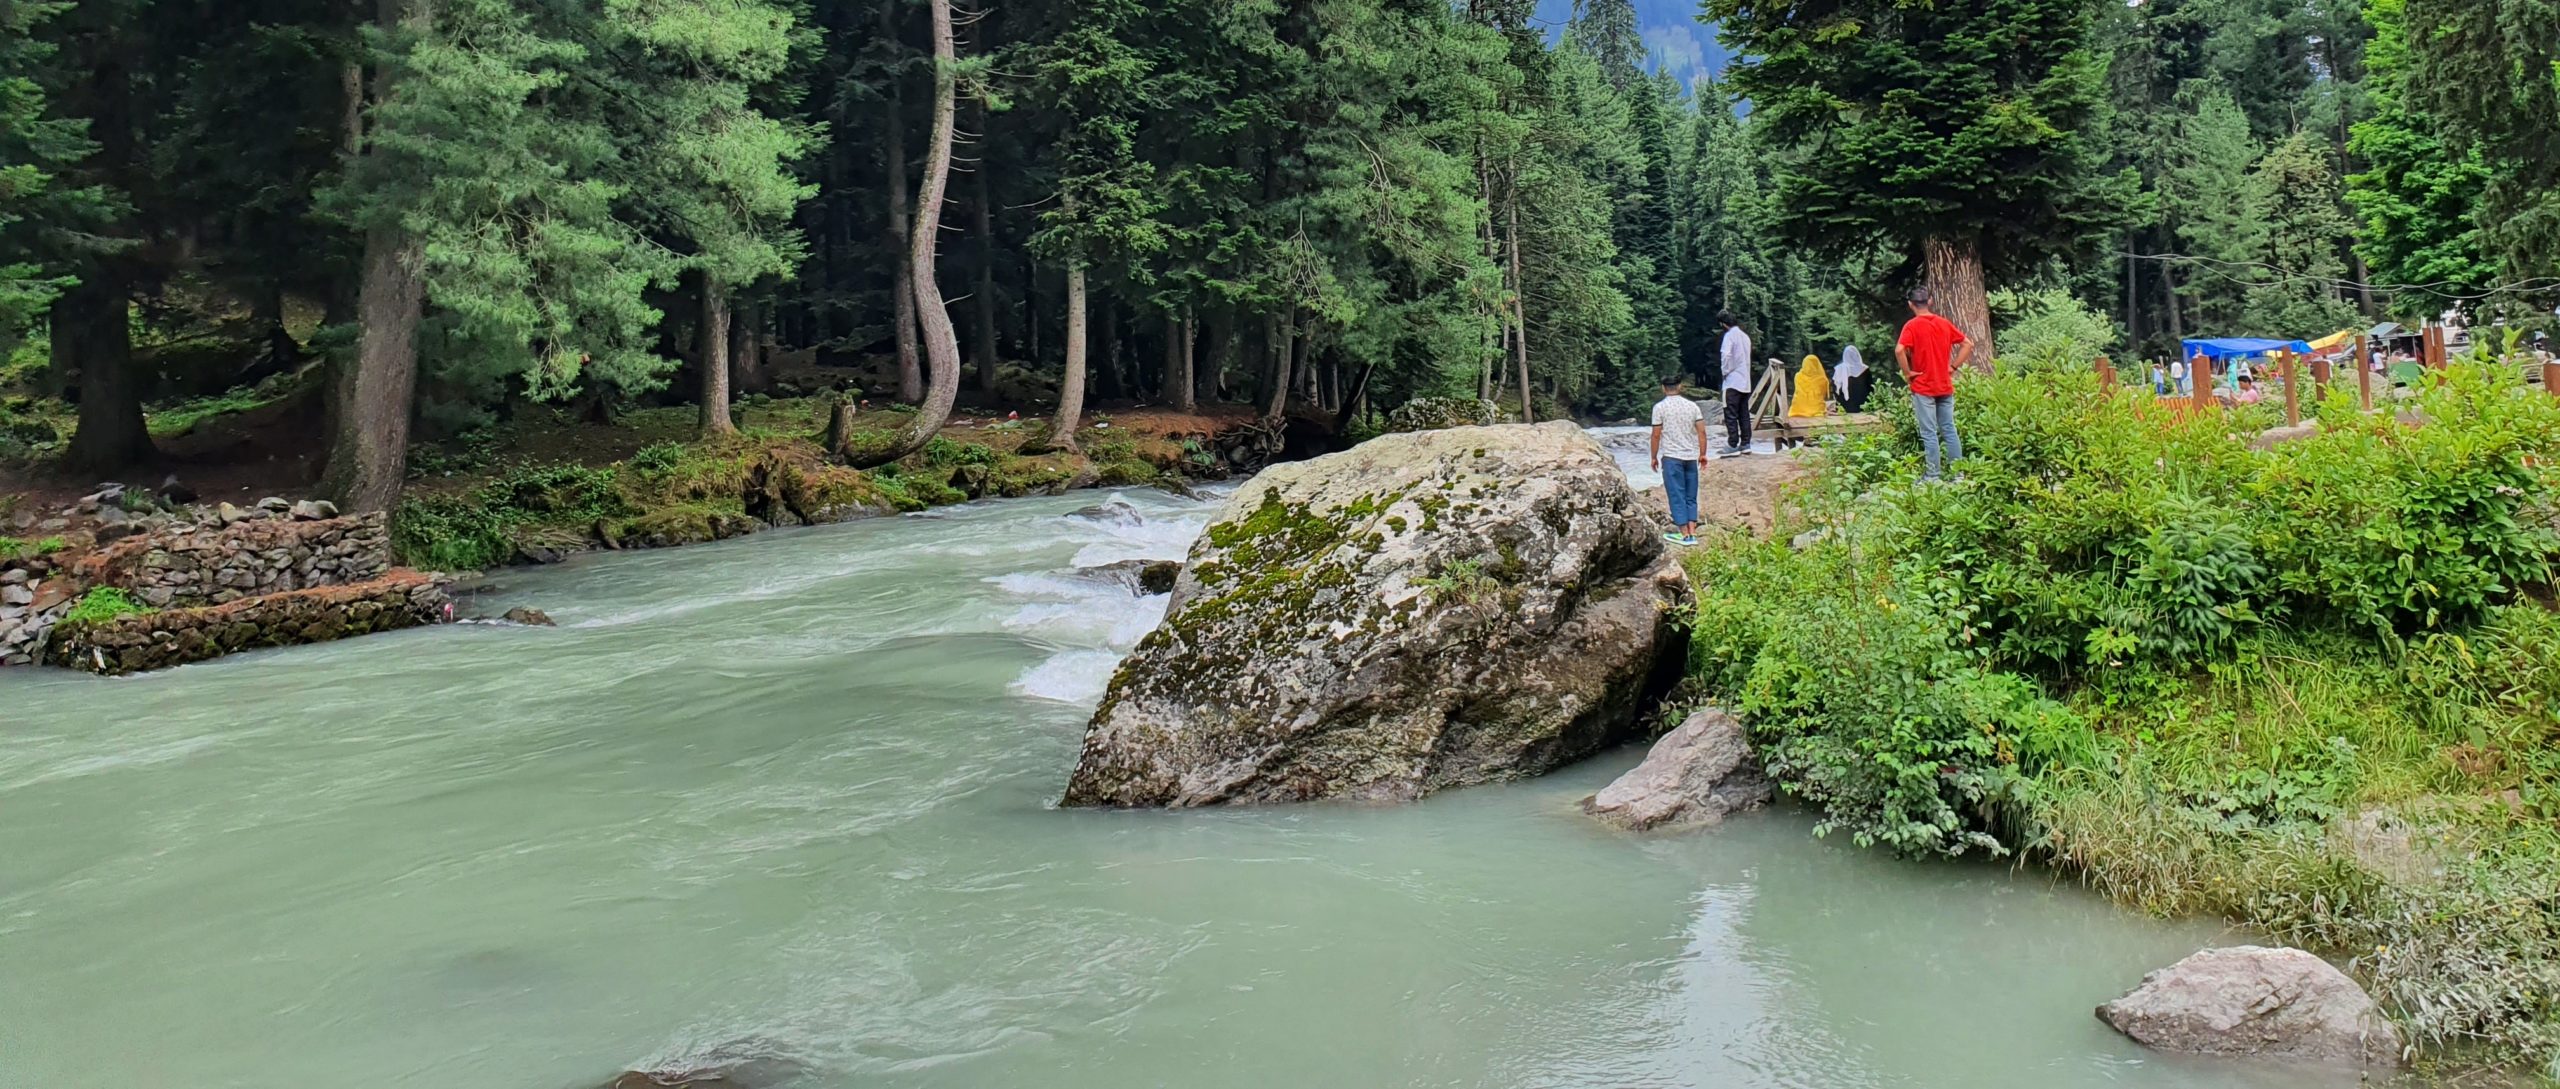 Kashmir – Full Circuit Trekking Tour Package – Comfort trekking in Kashmir, India